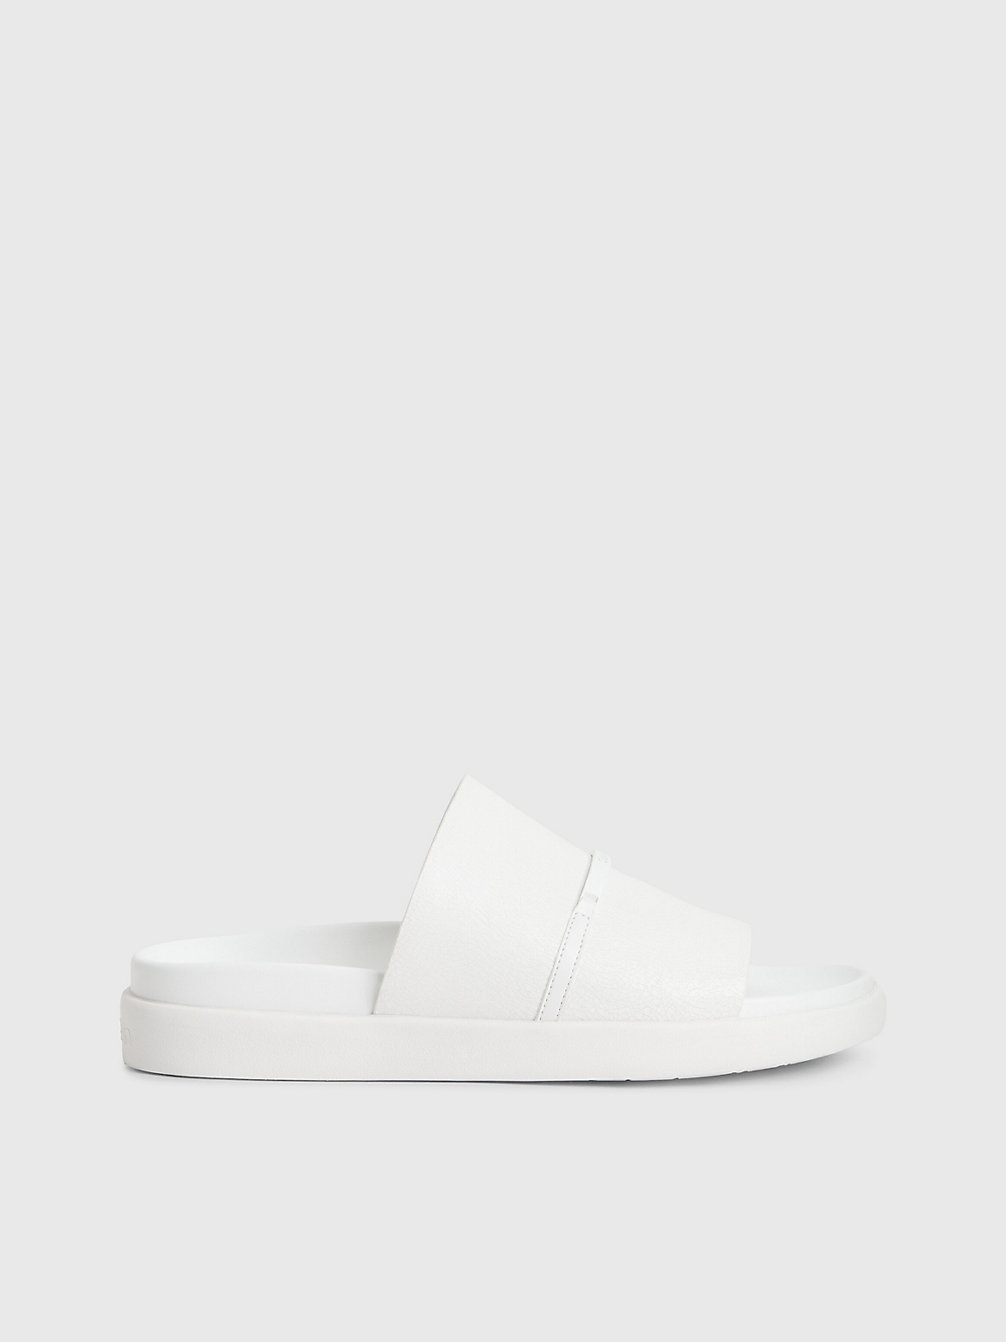 BRIGHT WHITE Crackle Leather Sandals undefined women Calvin Klein